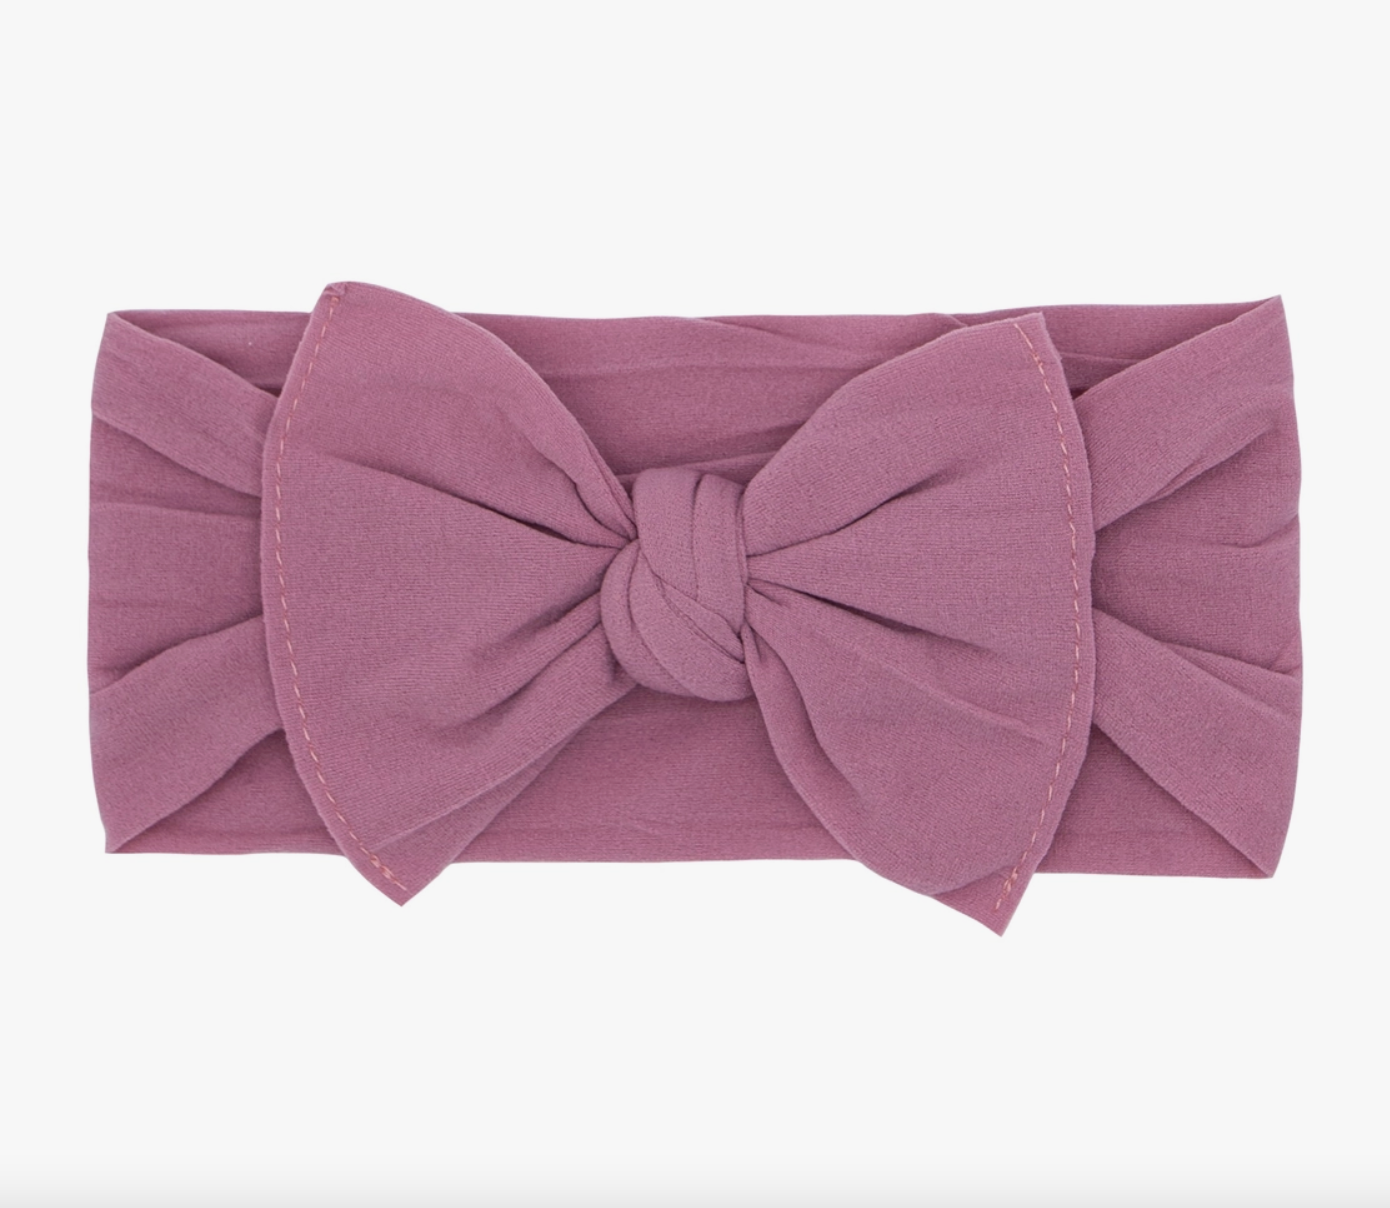 Knotted Headband Bow - Mauve Pink